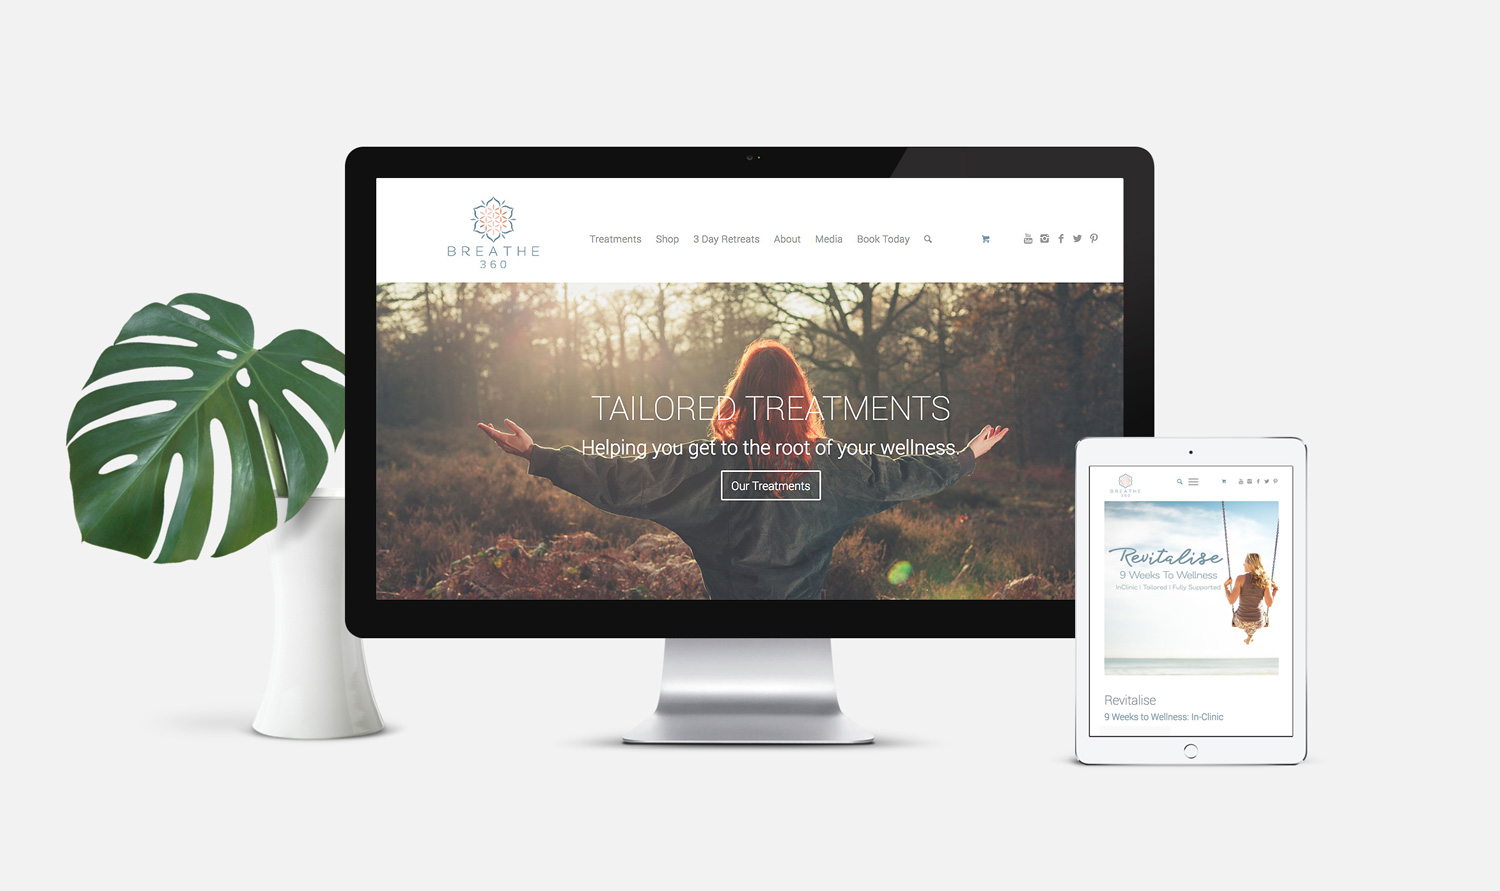 Wellness Website Design: Breathe360 Shop, Treatments & Retreats